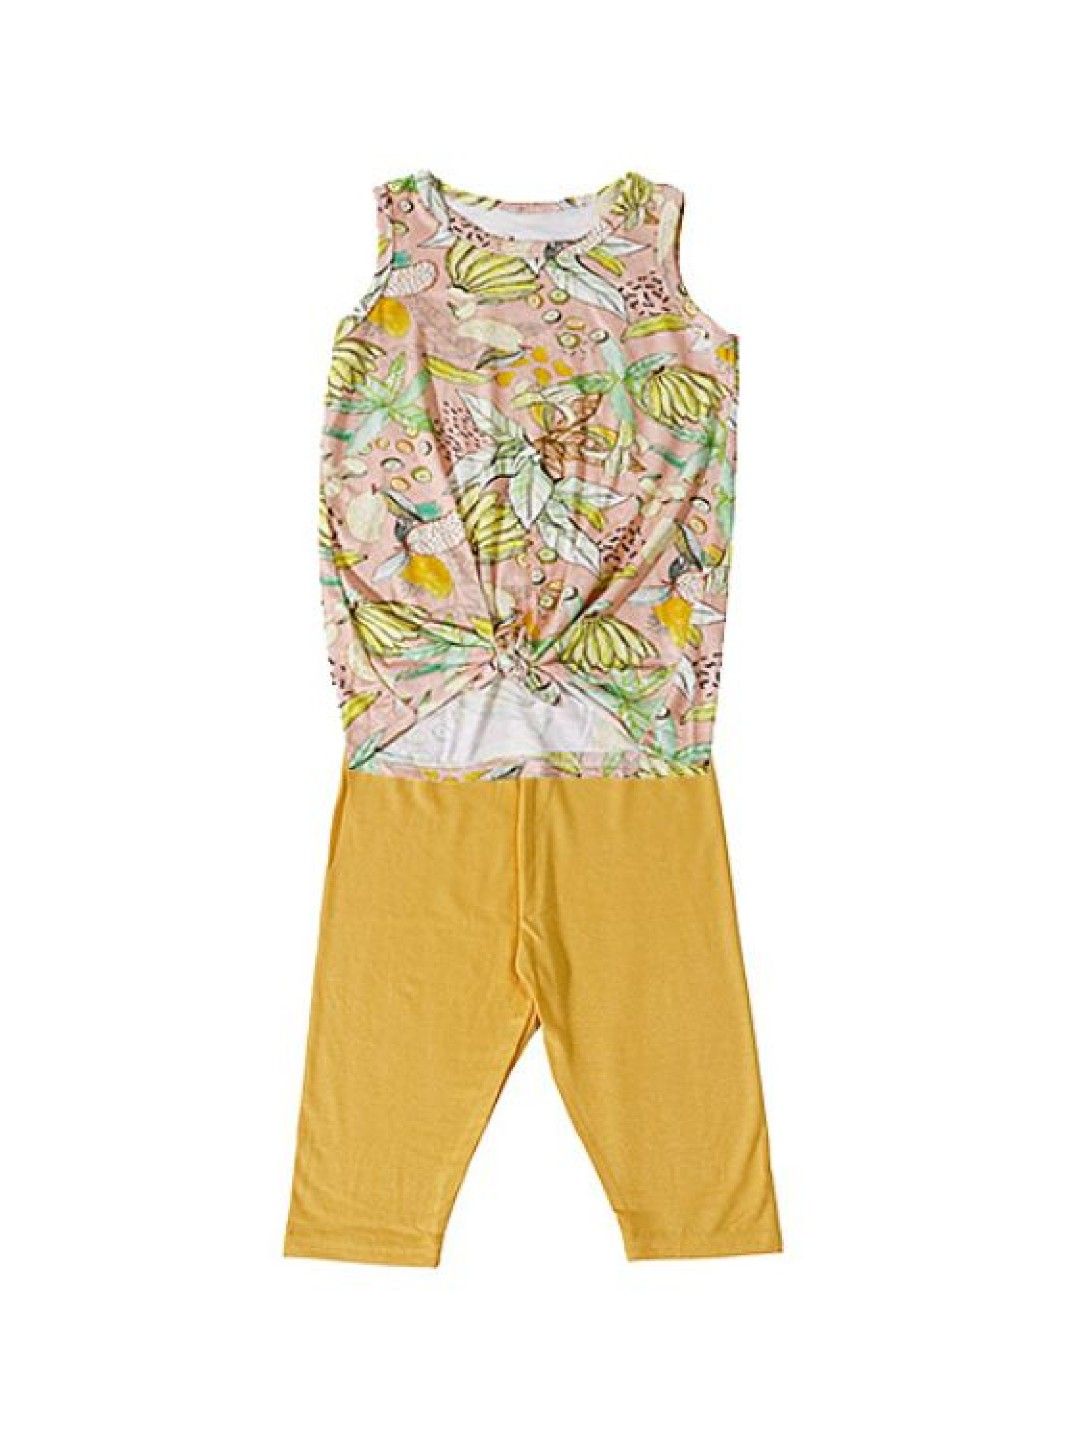 bean fashion Alessa Lanot Playwear Saging Swirl Sleeveless with Plain Capri Leggings (Multicolor- Image 2)